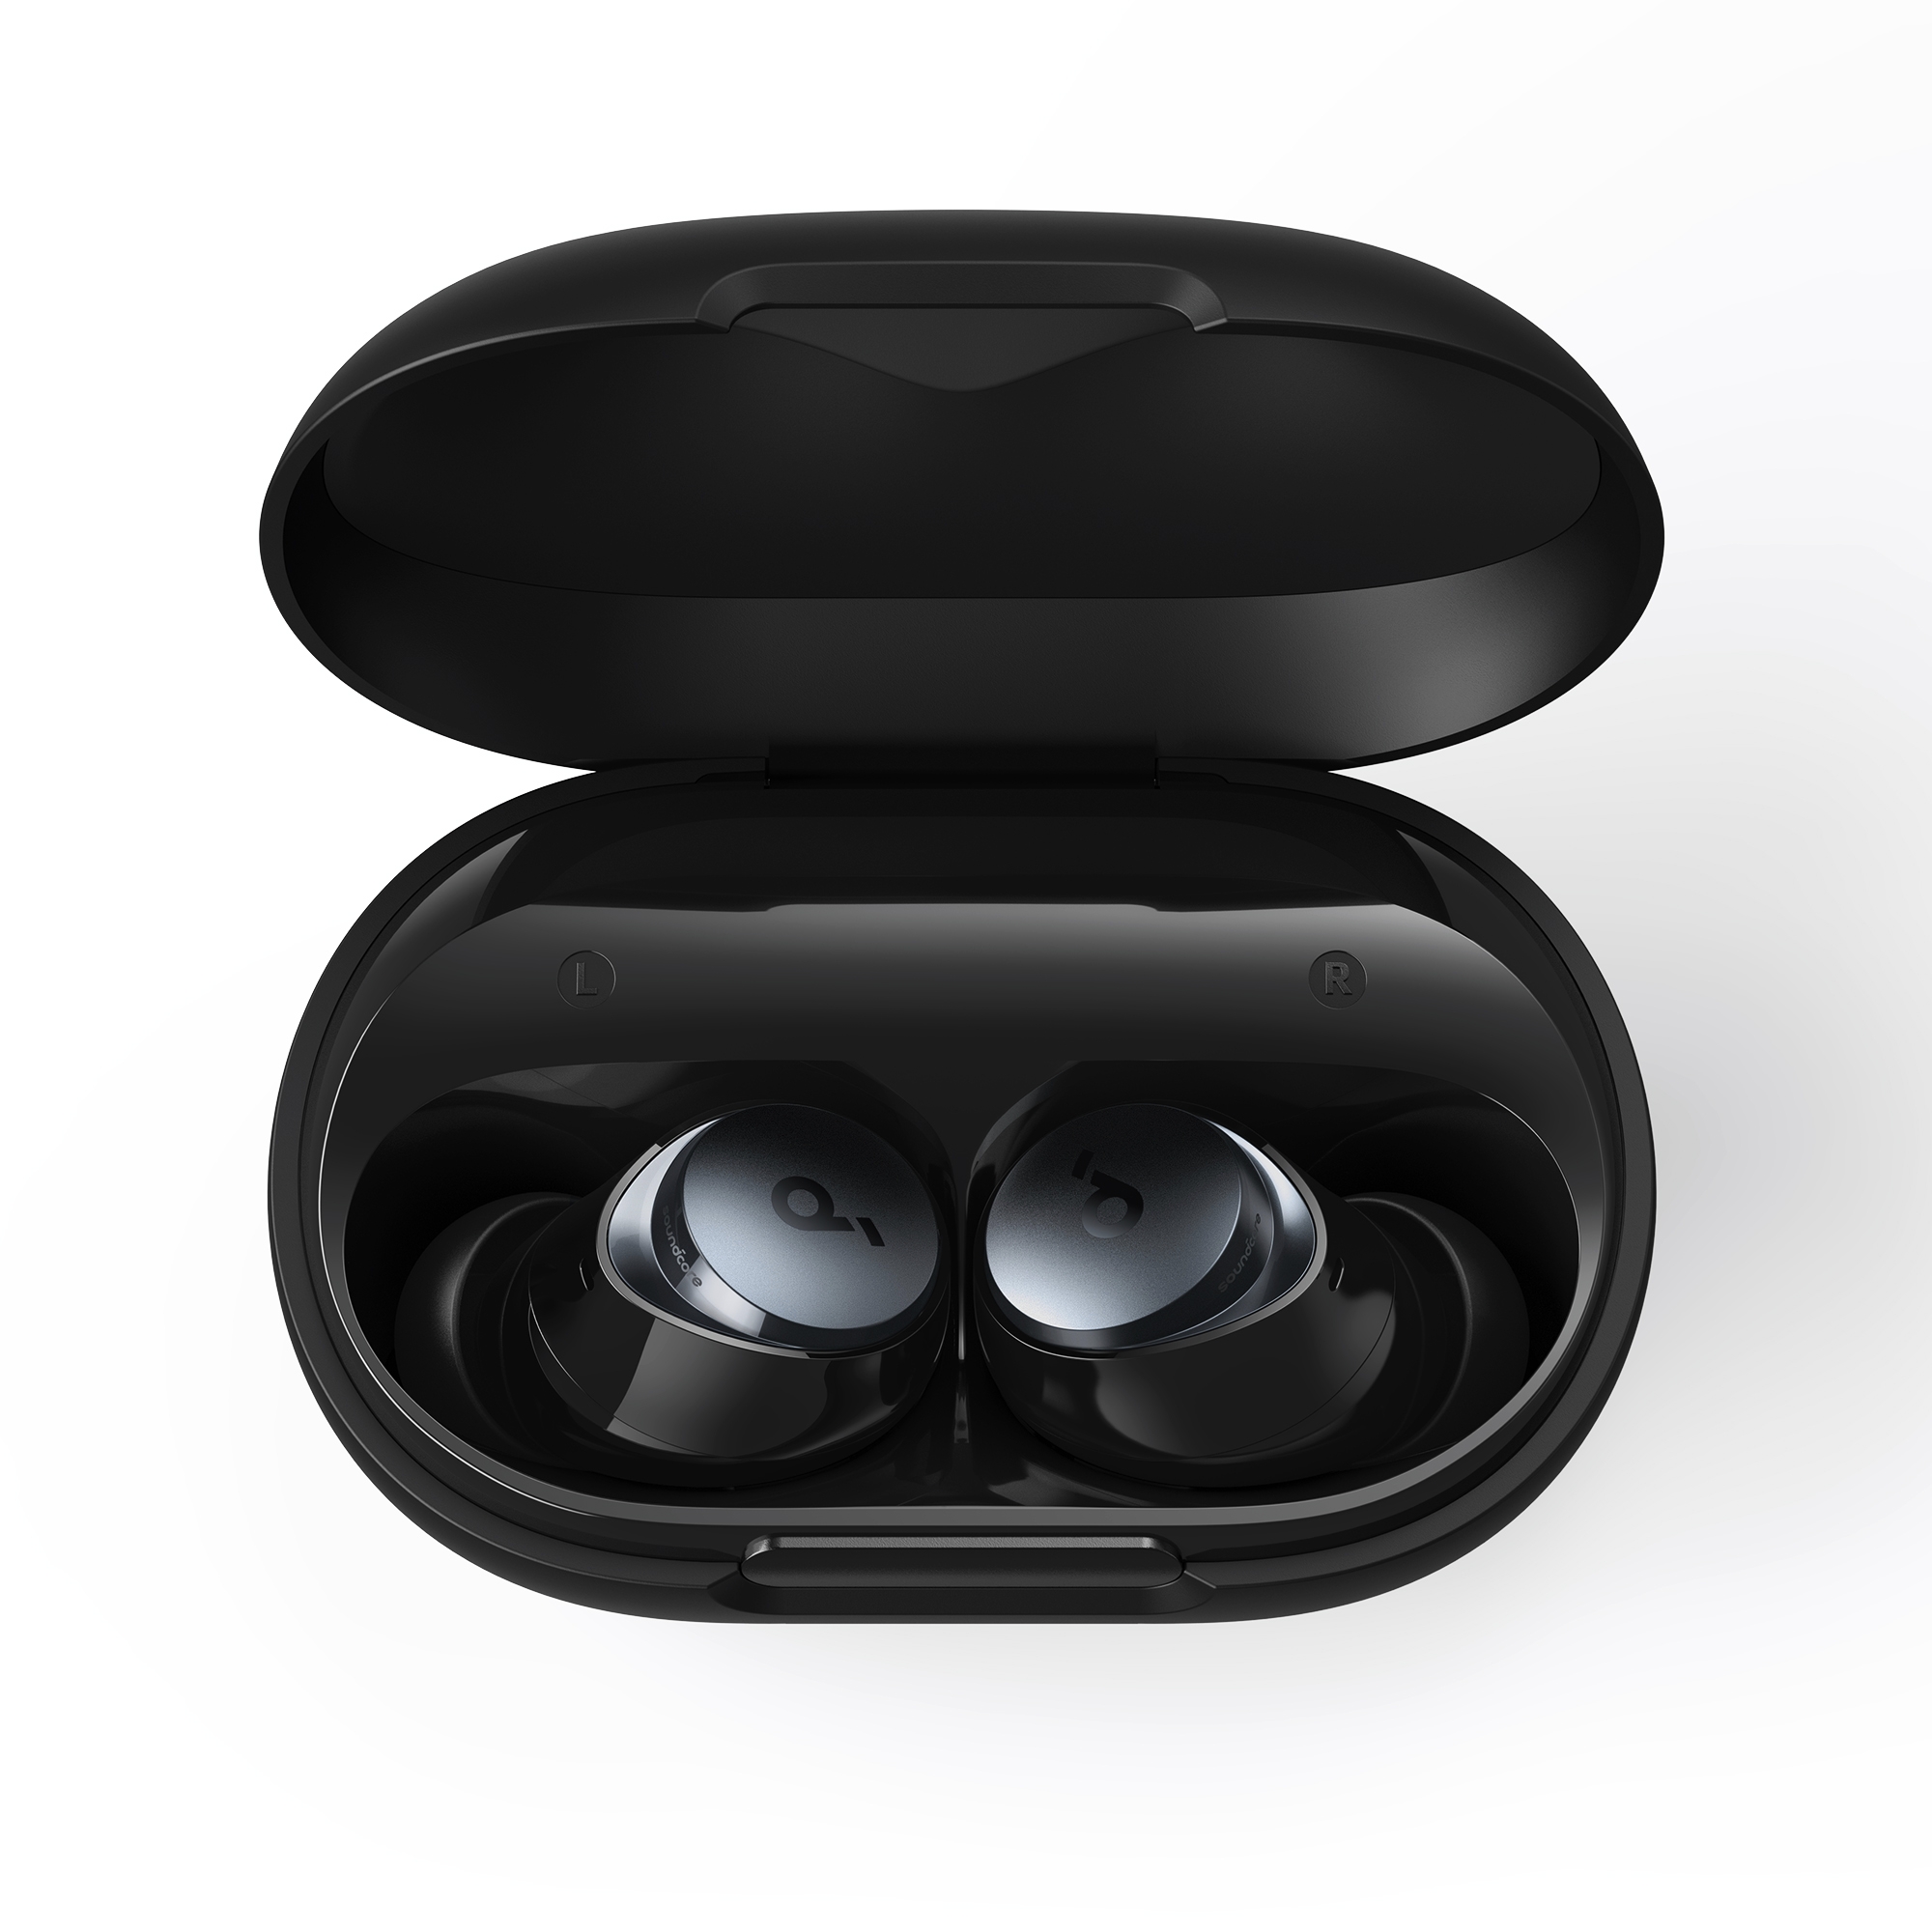 Soundcore A40 Wireless Earbuds - Black - Case + Earbuds